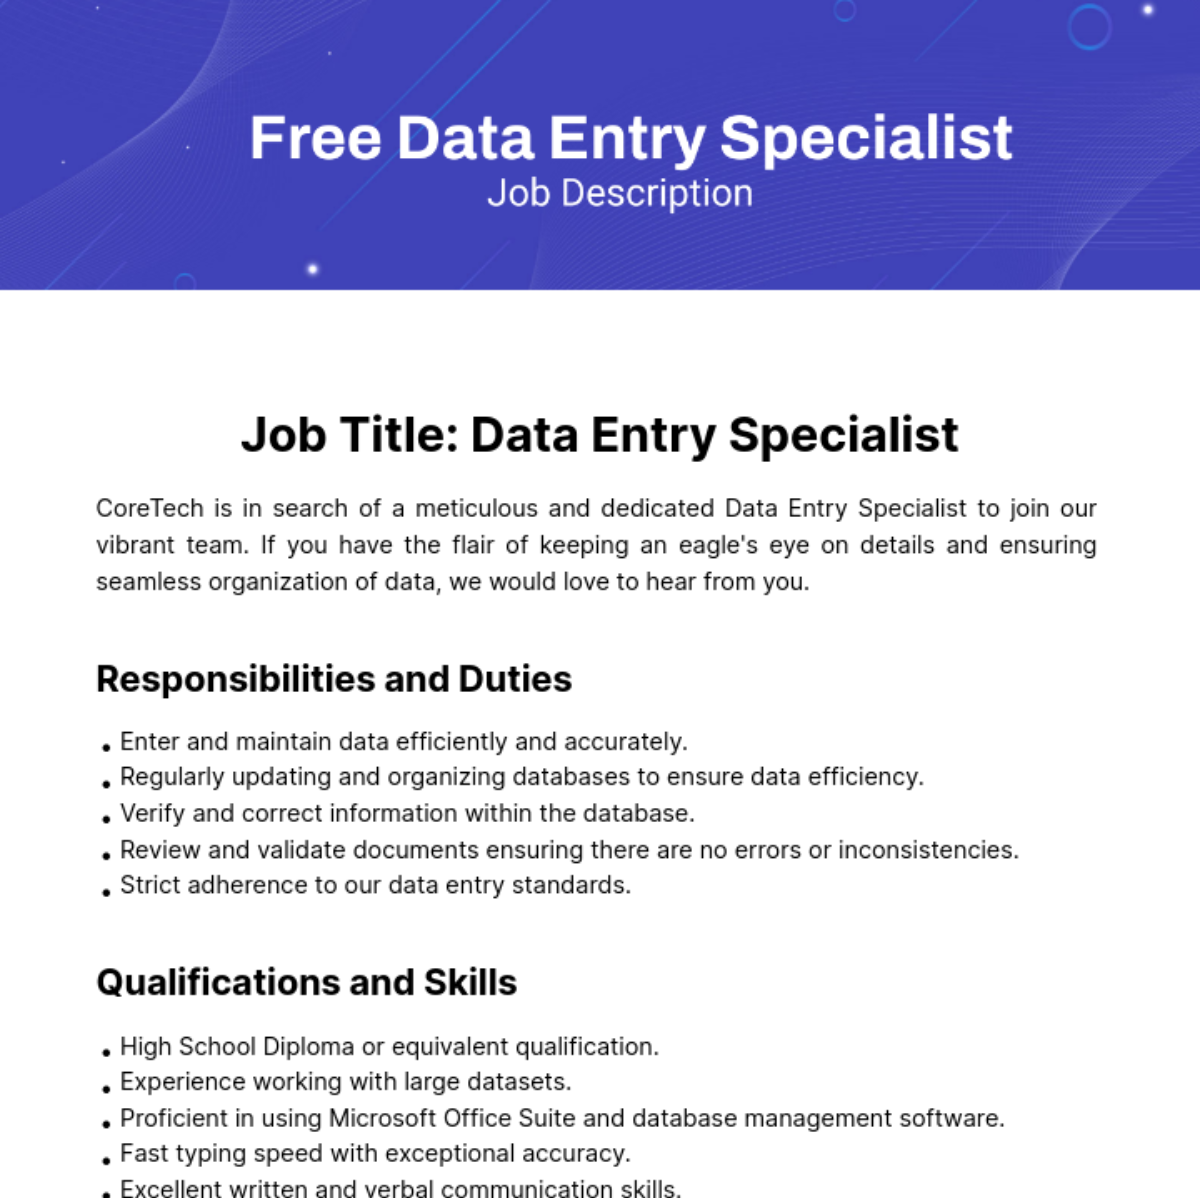 Free Data Entry Specialist Job Description Template